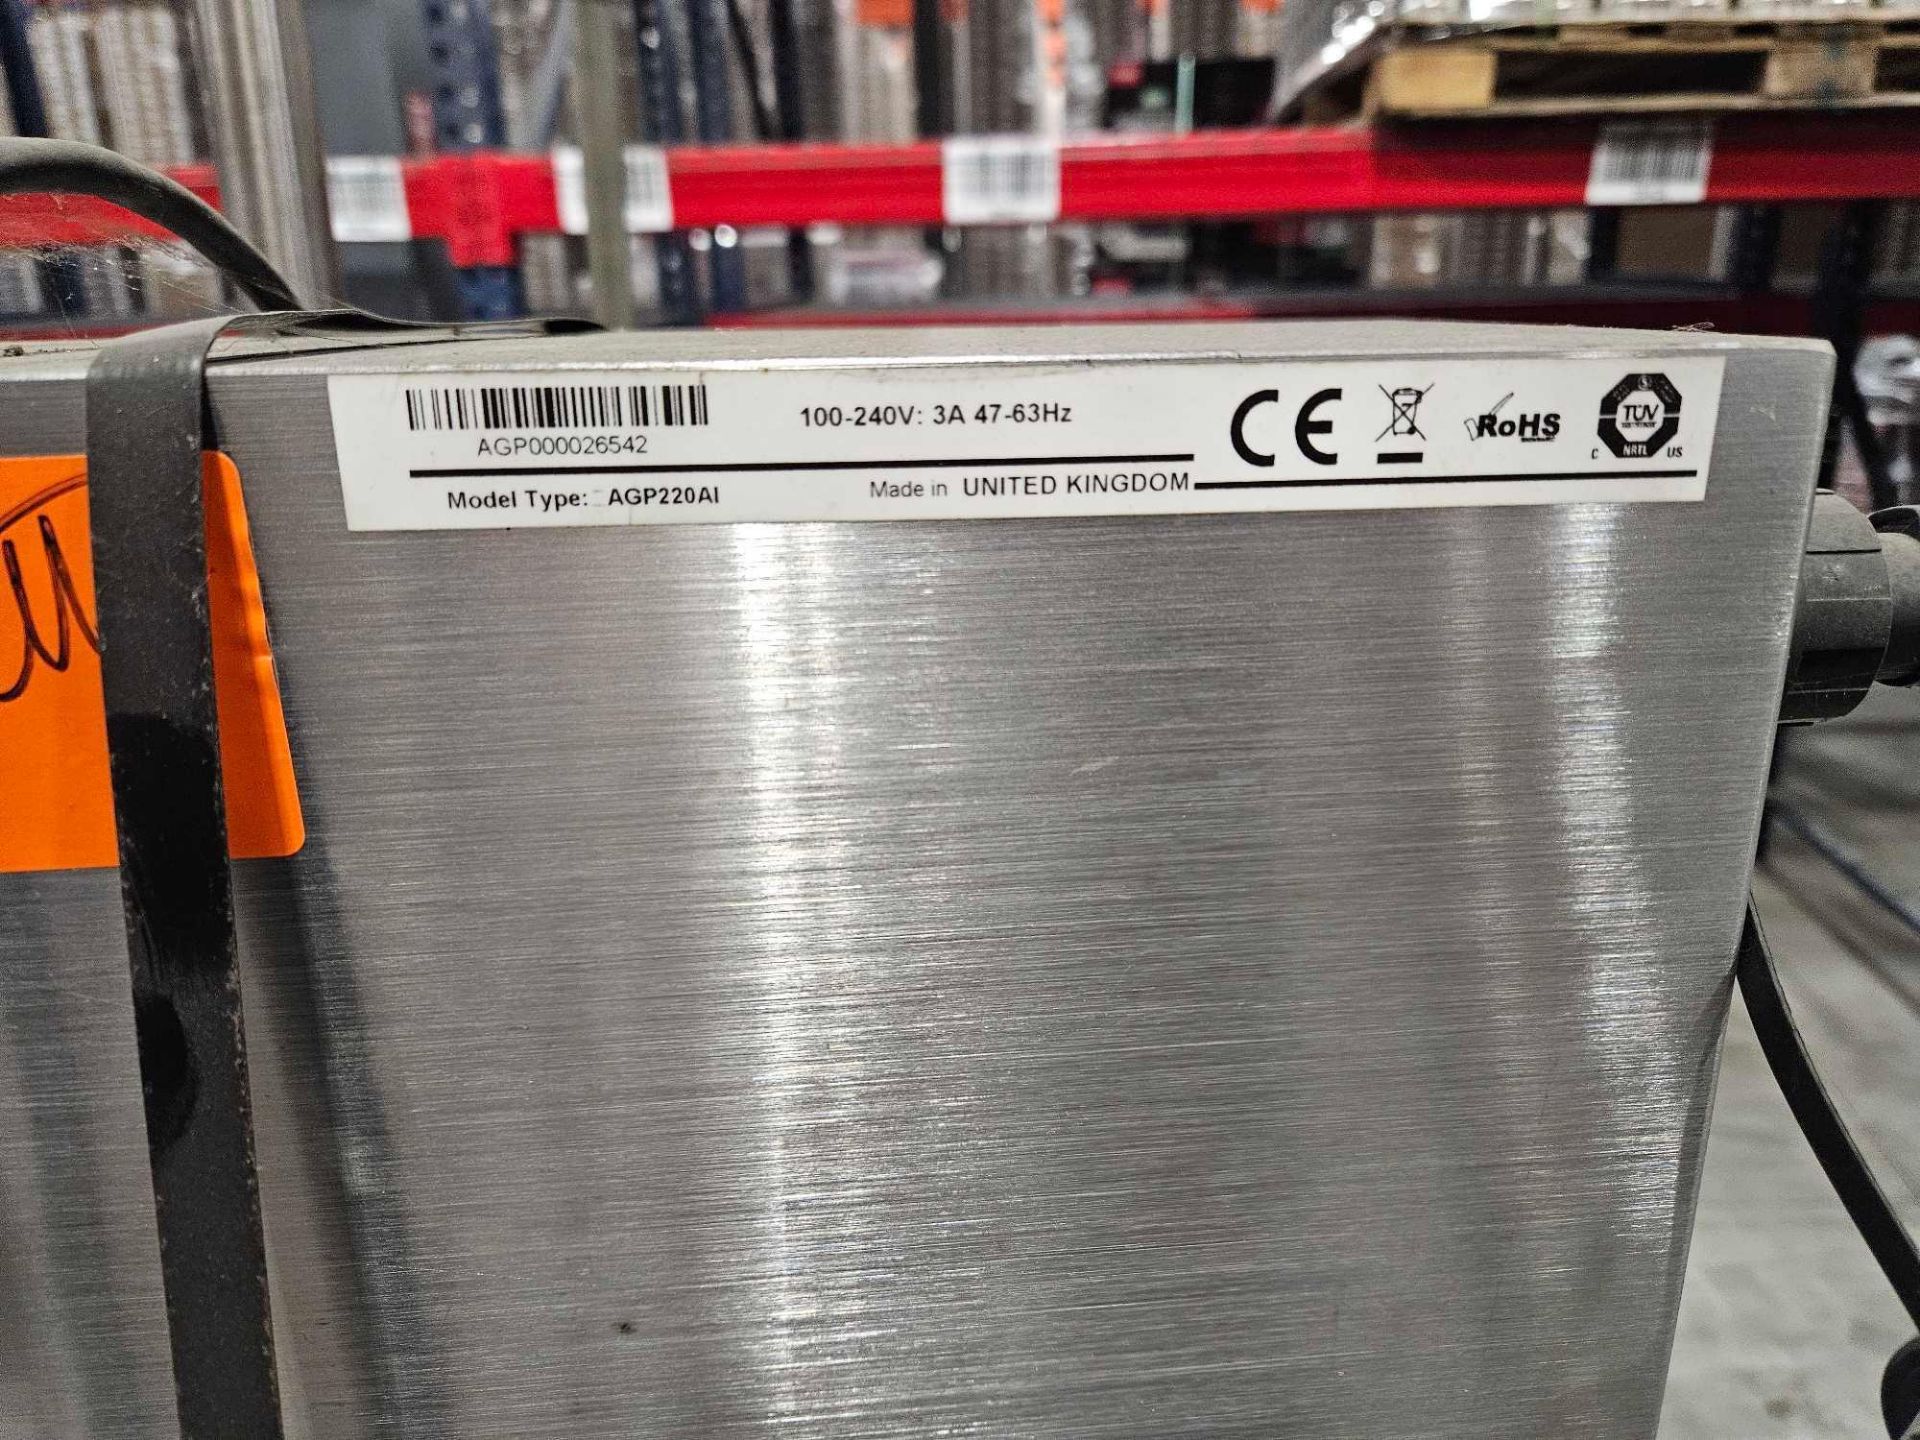 DOMINO AGP220AI Stainless Steel Inkjet Code Applicator - Image 7 of 7